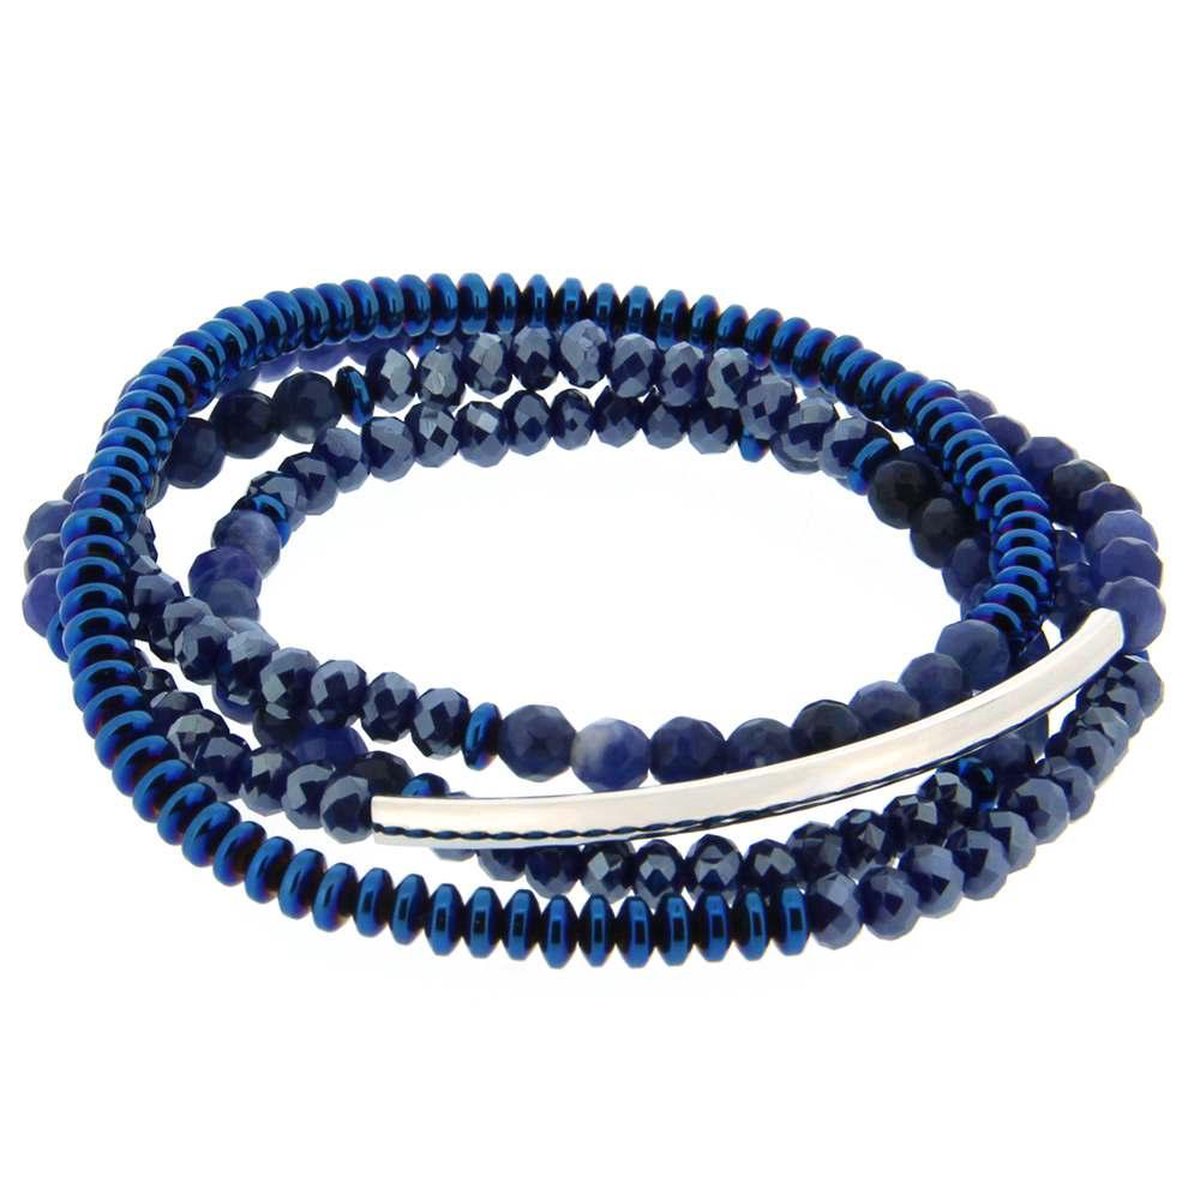 Bracelet beads 4 rows semi precious